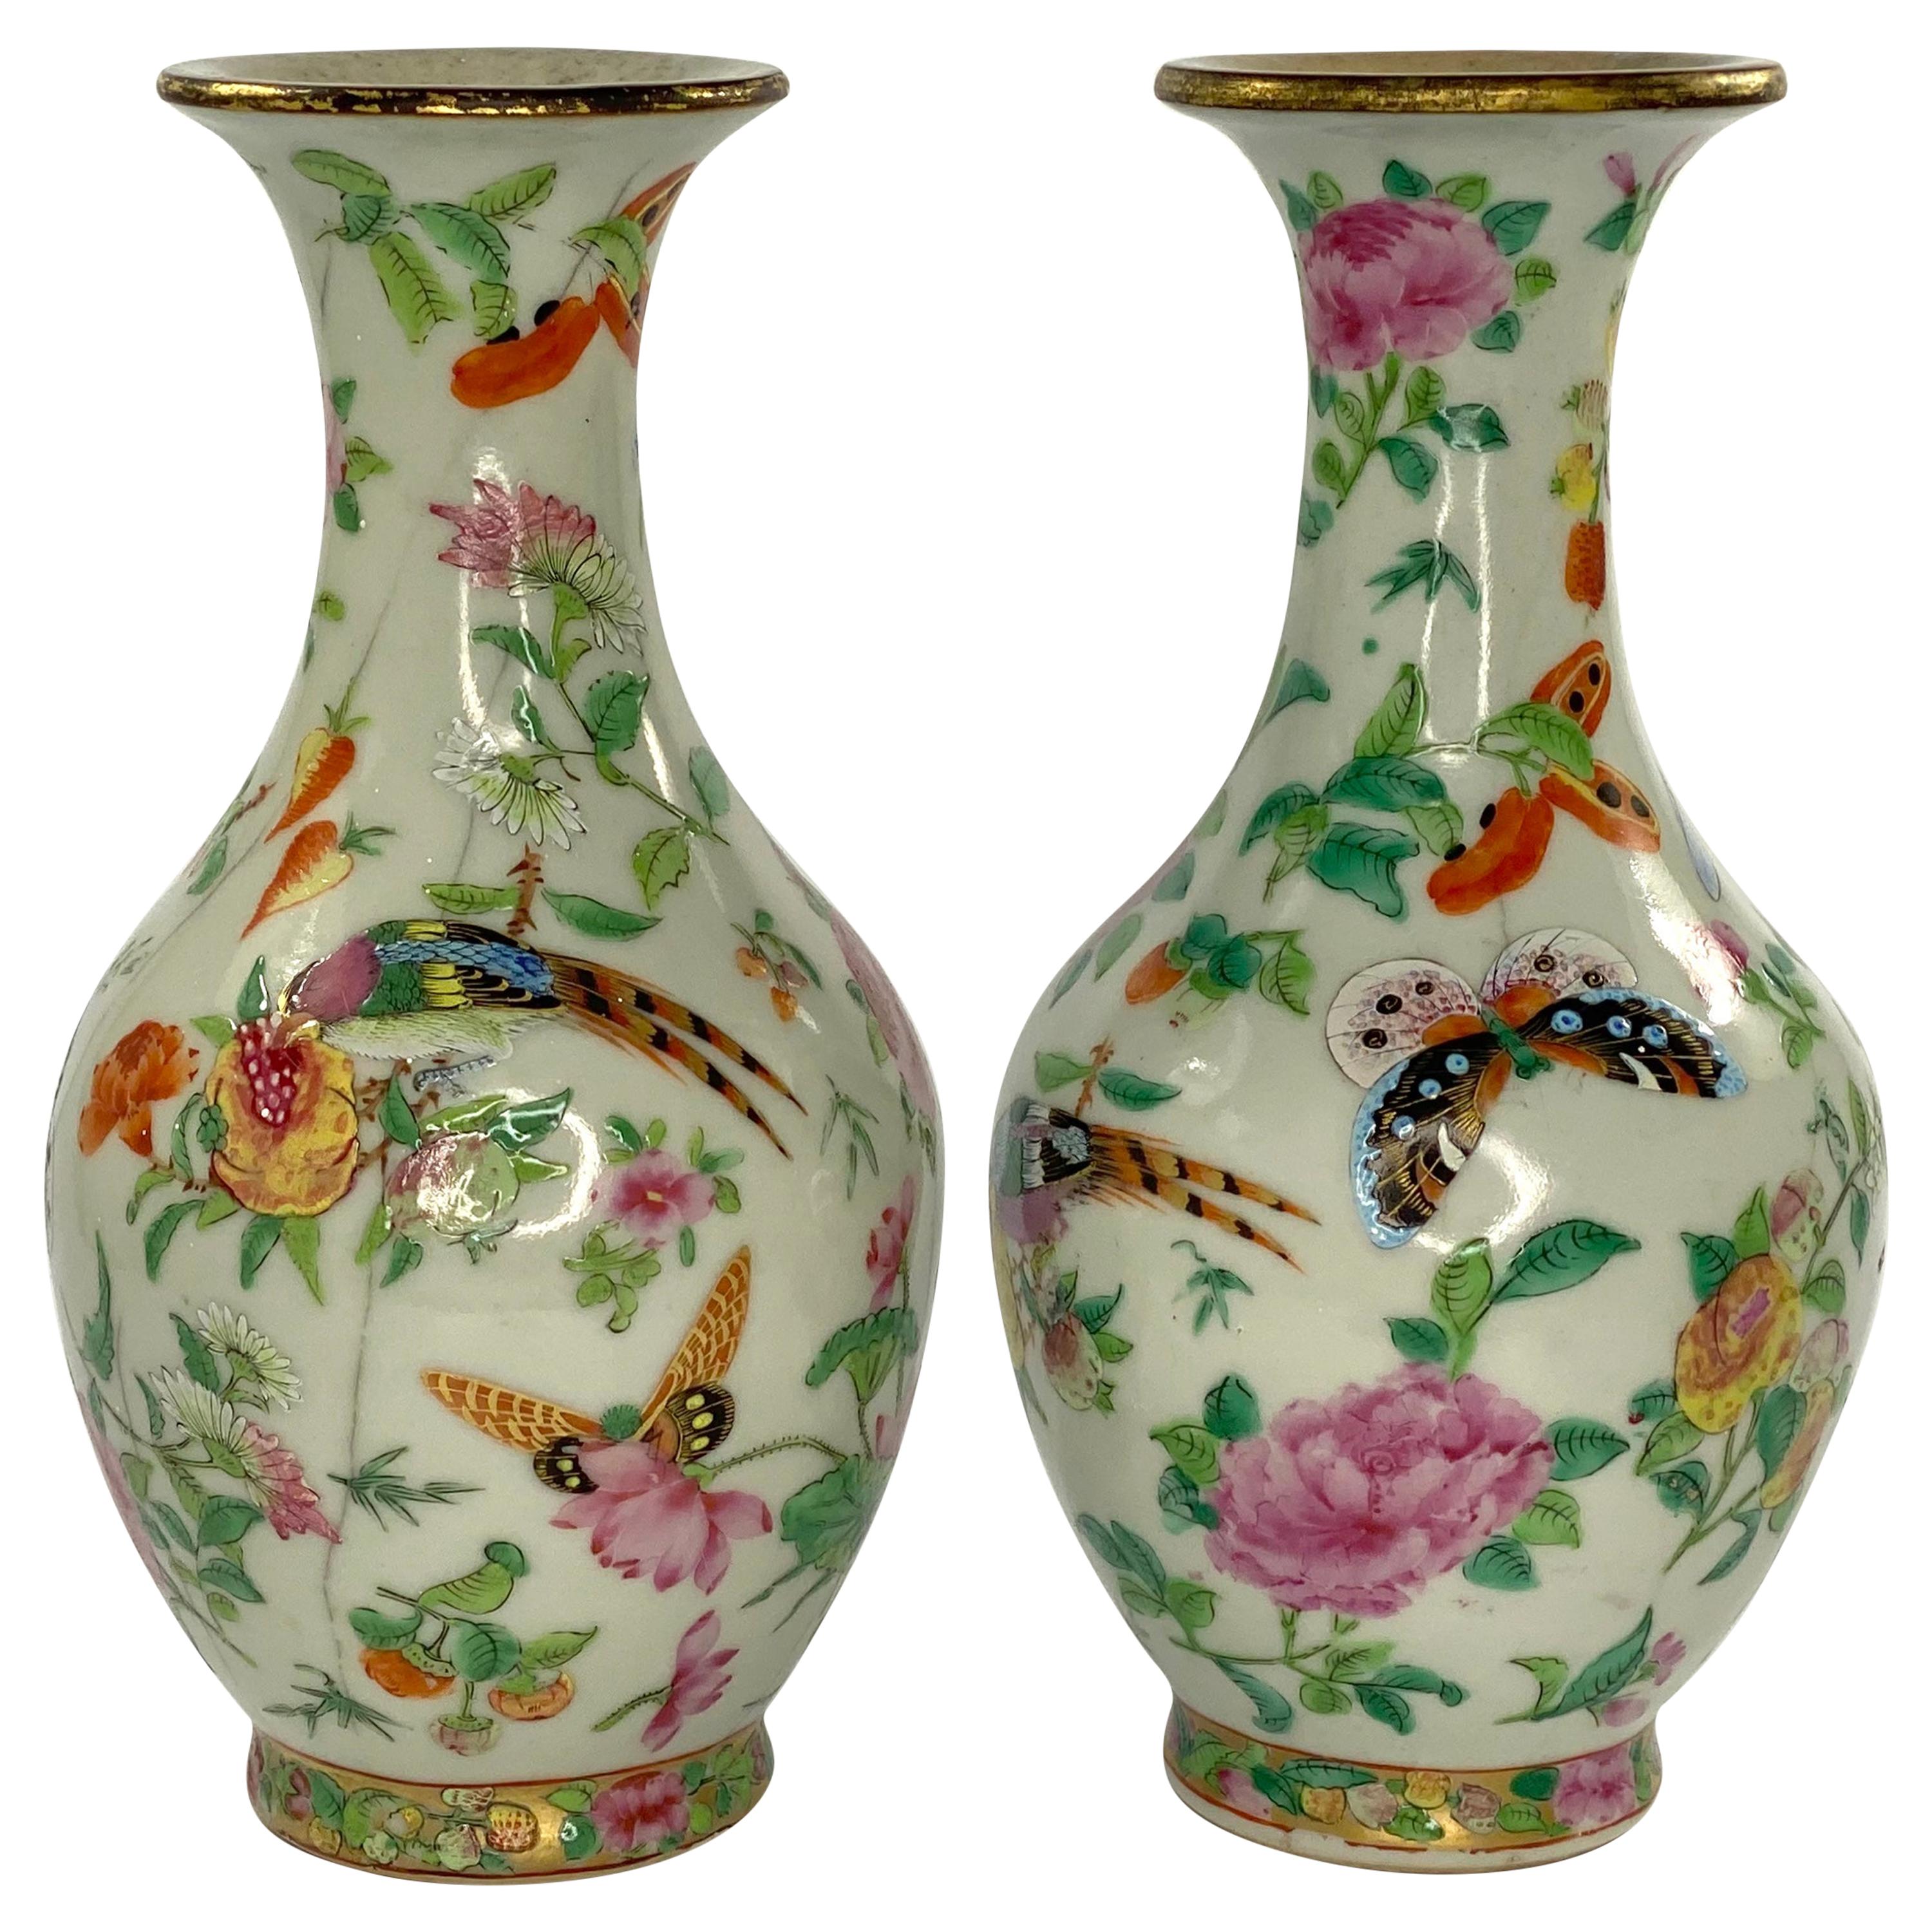 Chinese Crackle Glaze Vases, Famille Rose Decoration, circa 1880